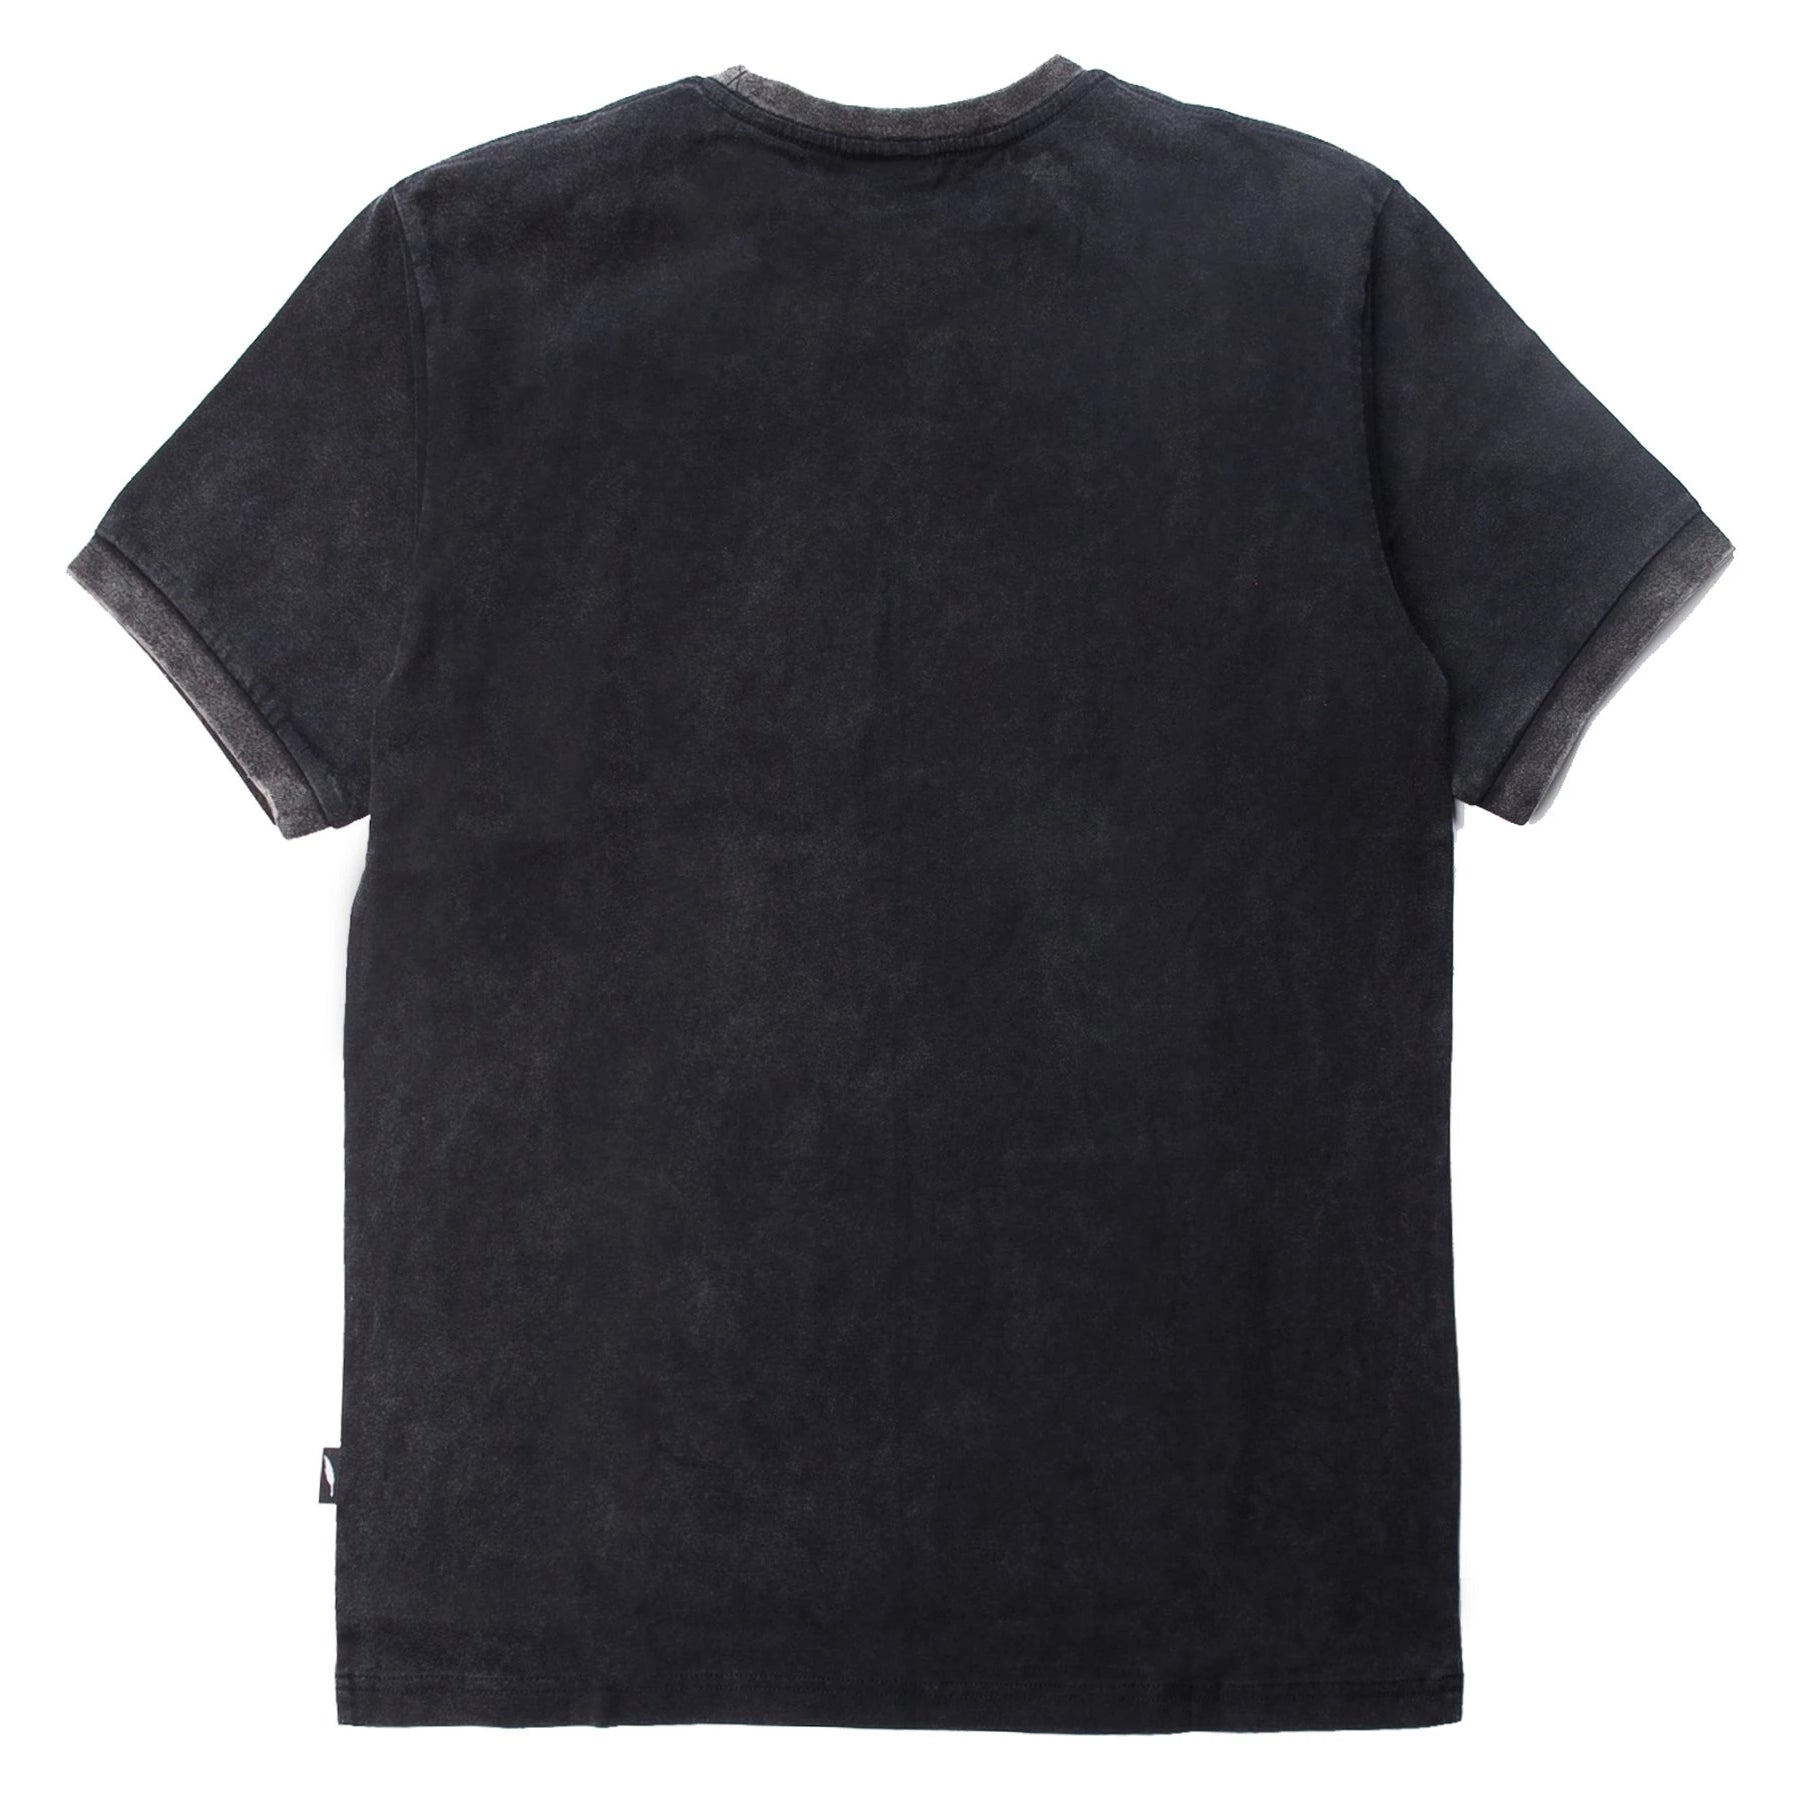 Chas T-Shirt (Black)